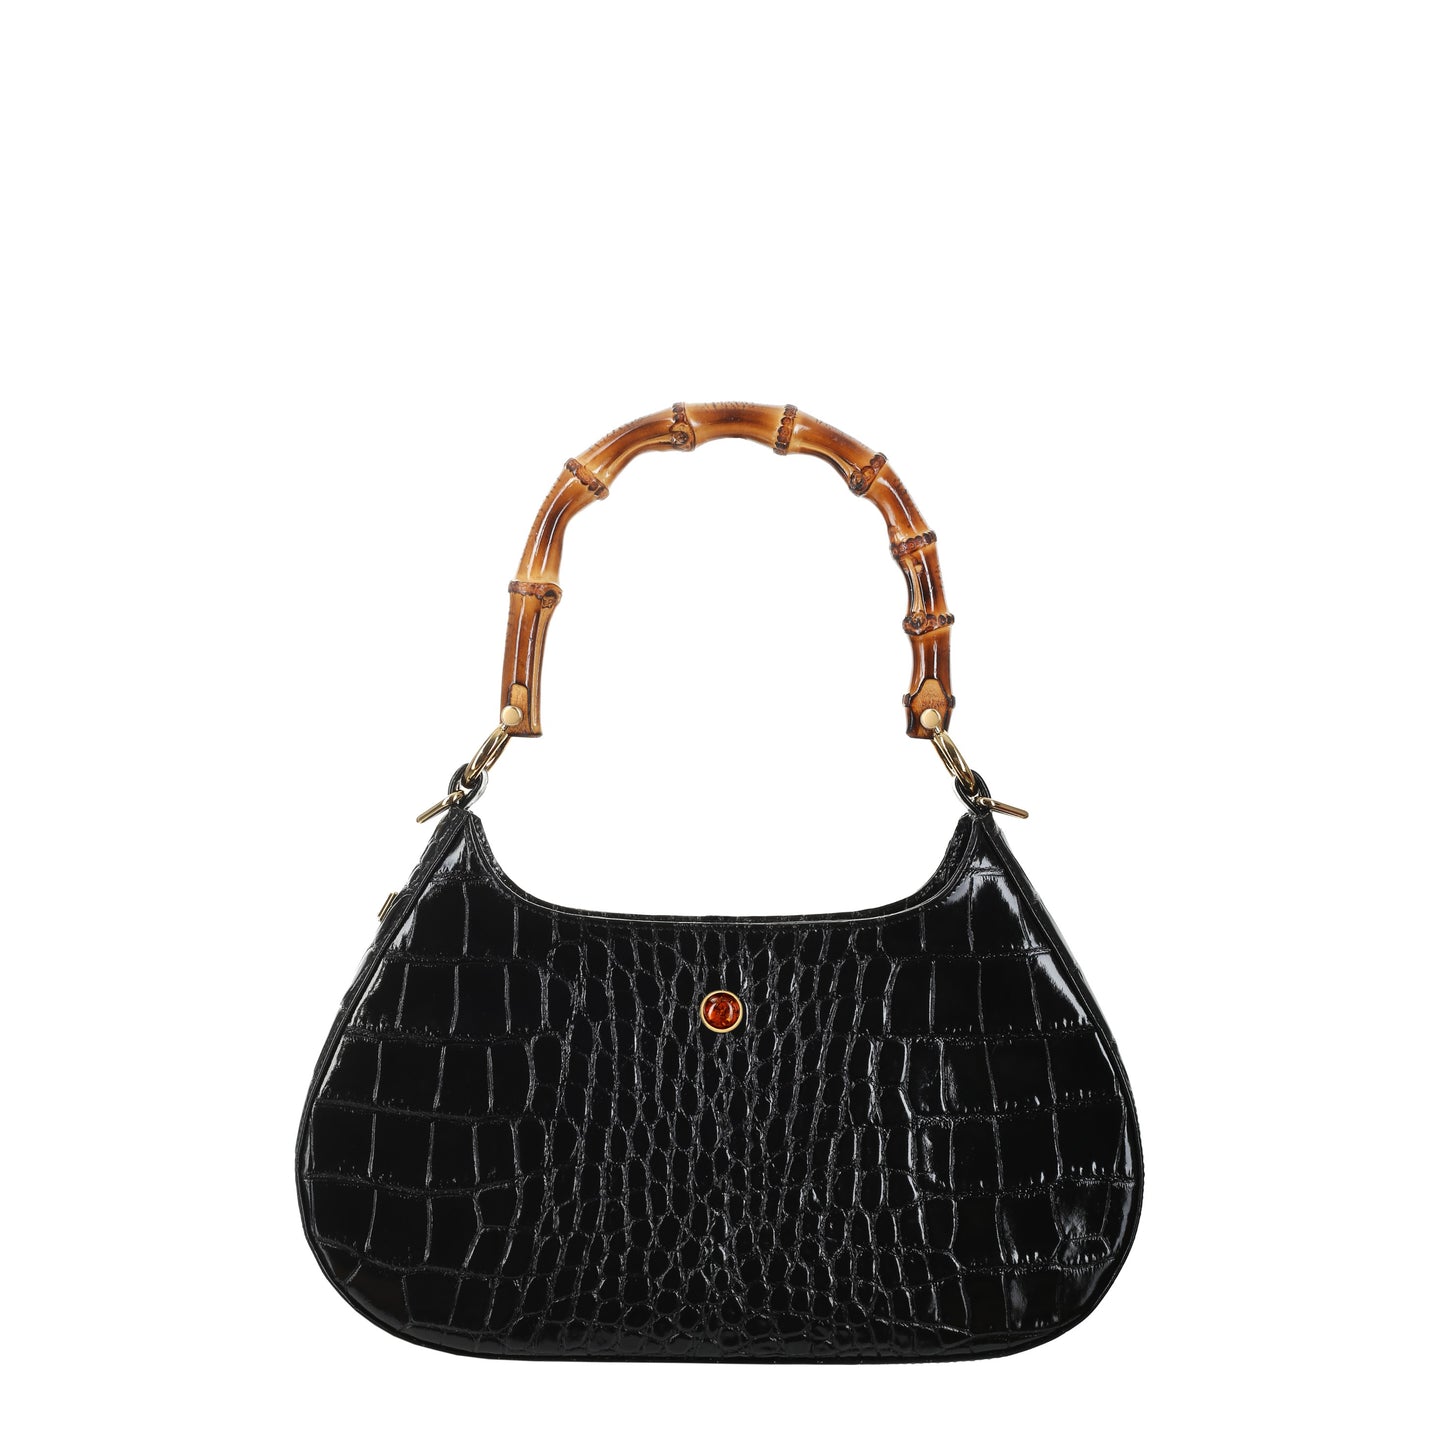 JANE BLACK women's leather handbag